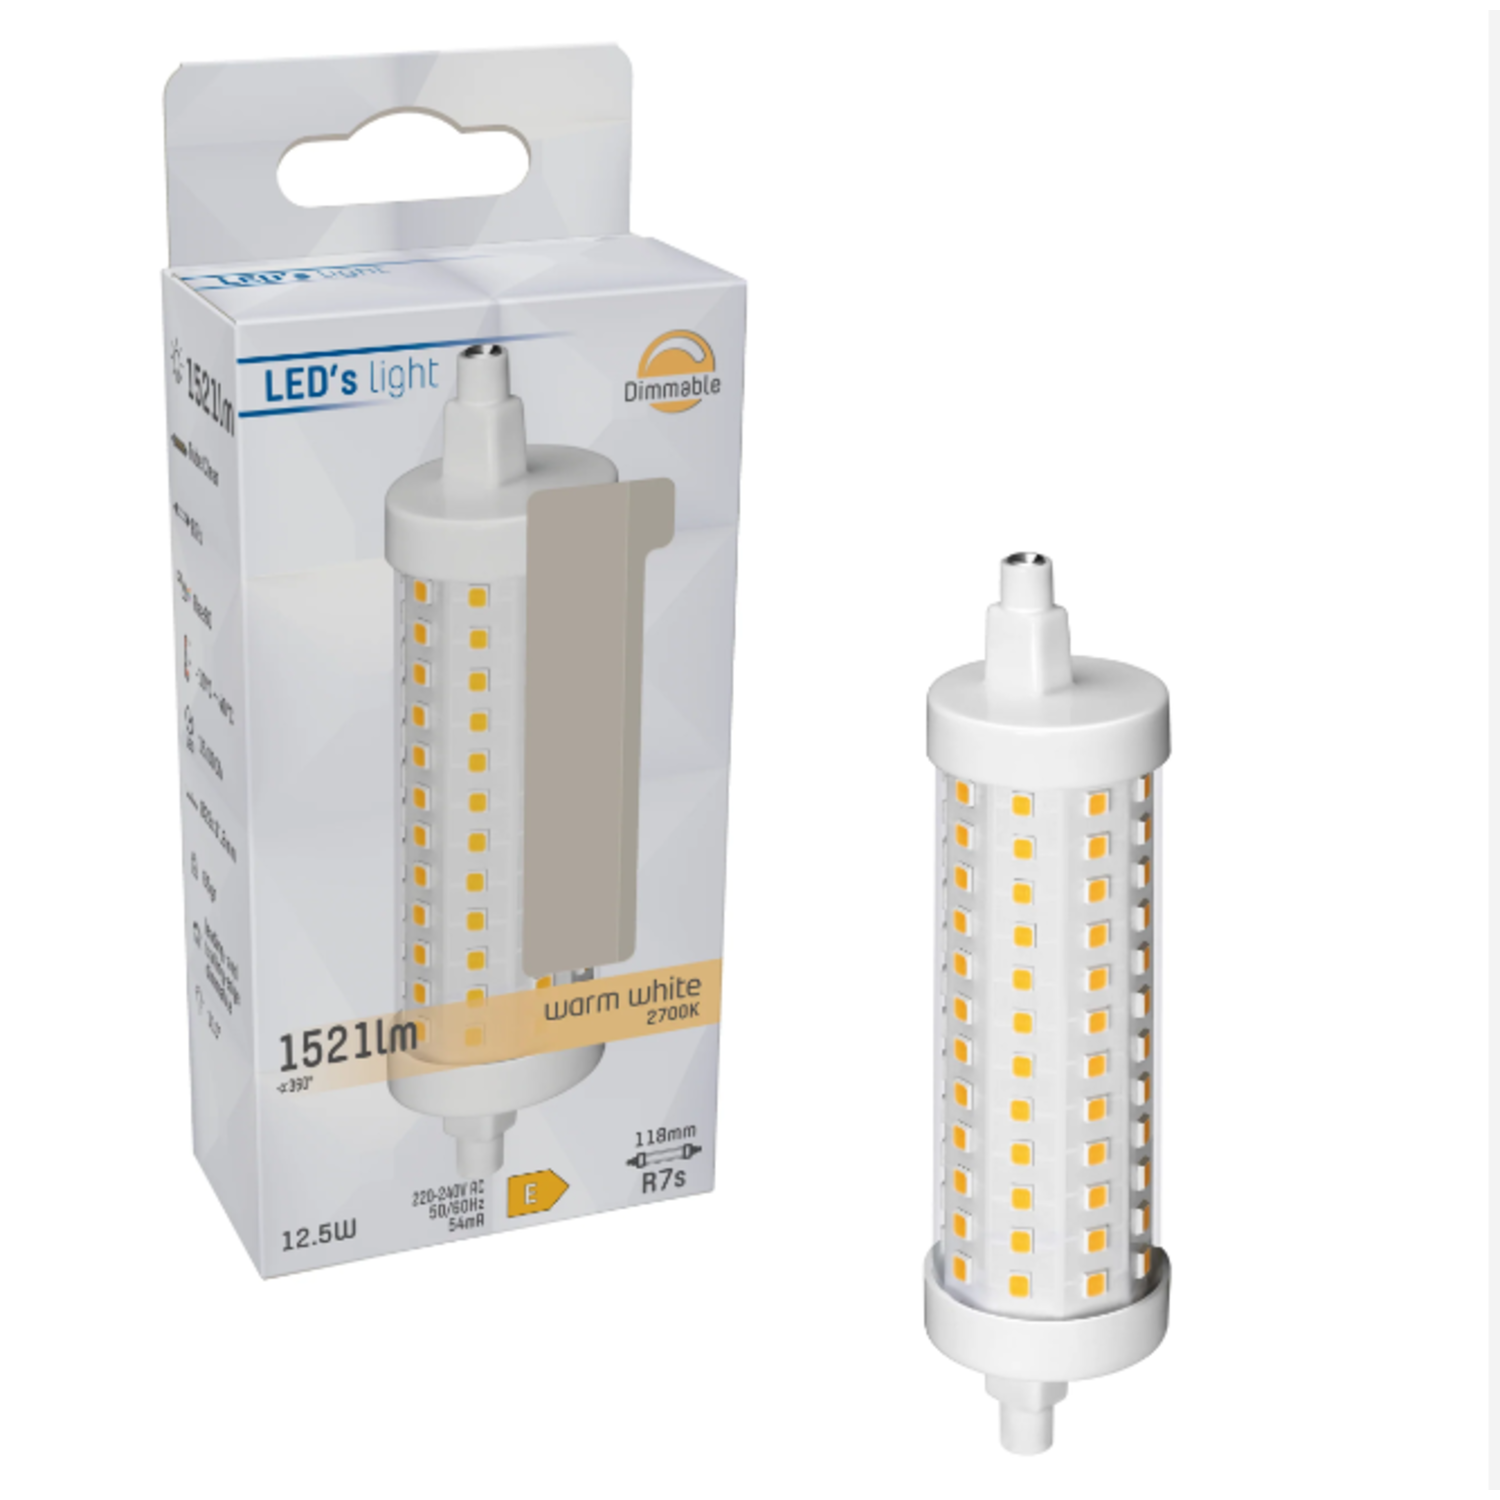 LED's light LED Rod bulb R7S 118 mm - Warm white - 12.5W replaces 100W -  ET48.com